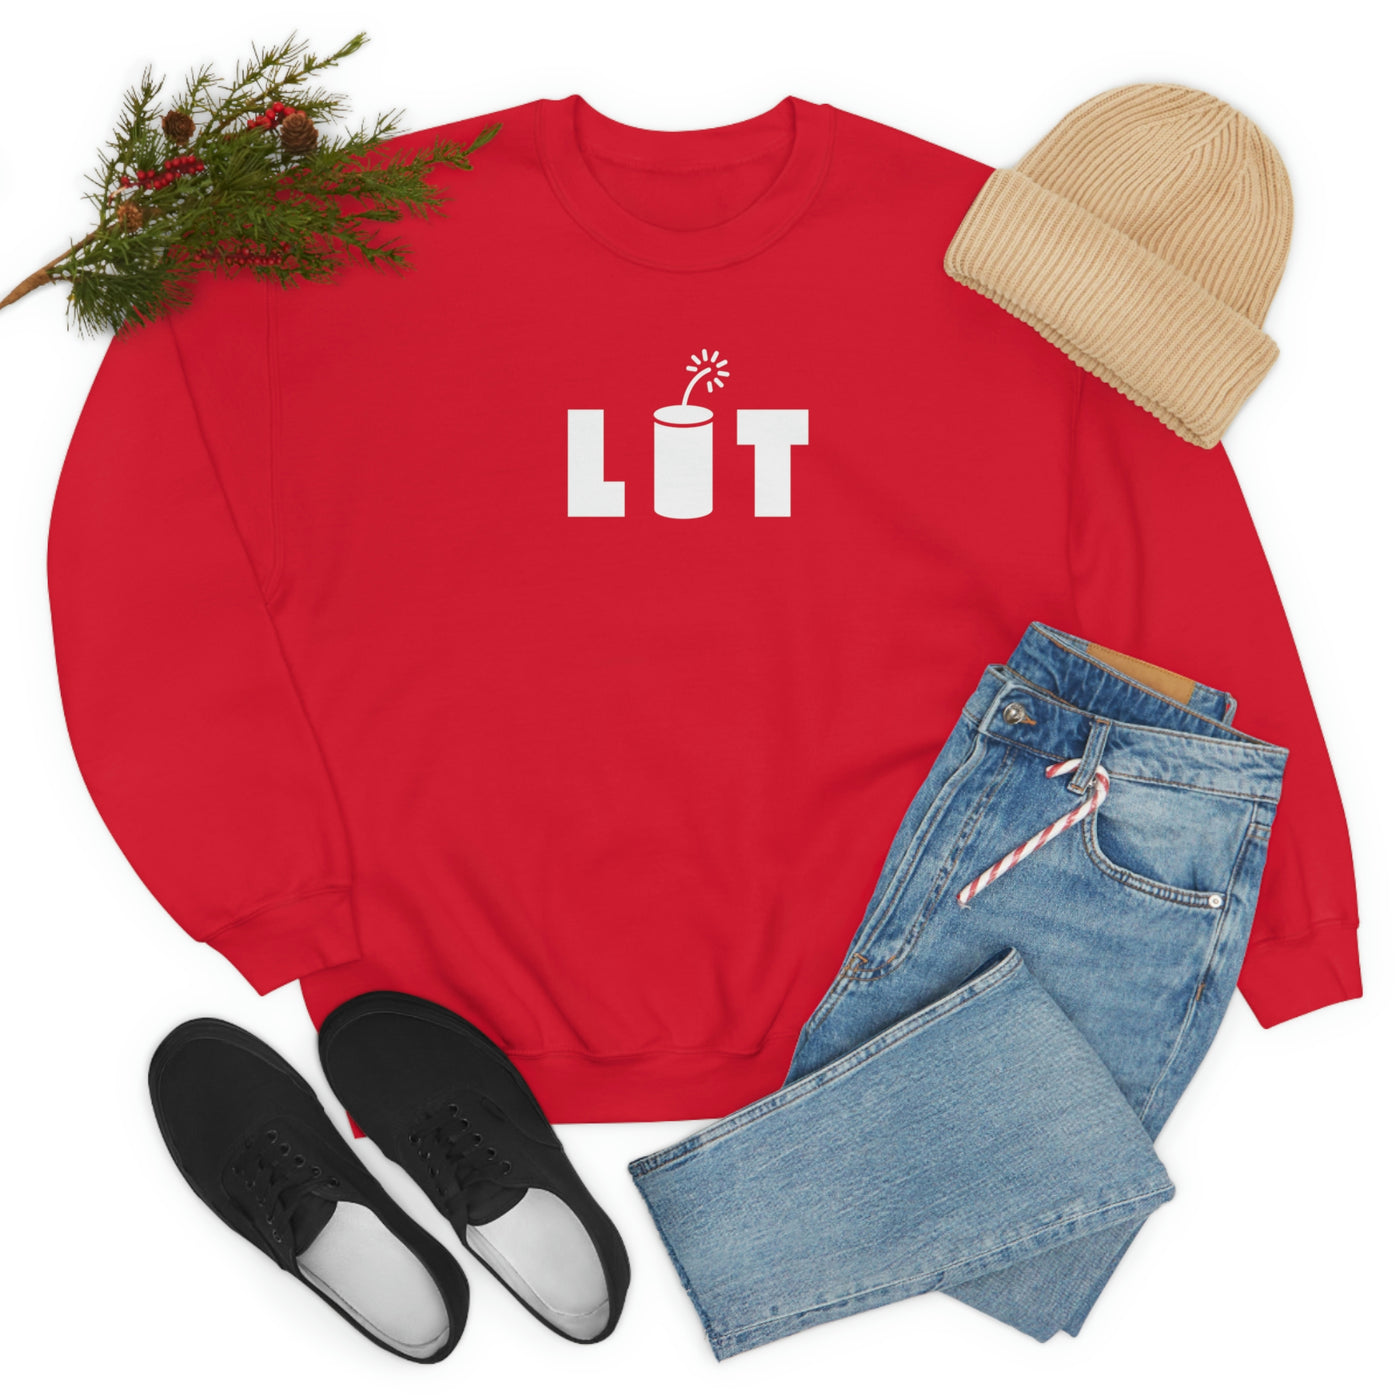 LIT Crewneck Sweatshirt